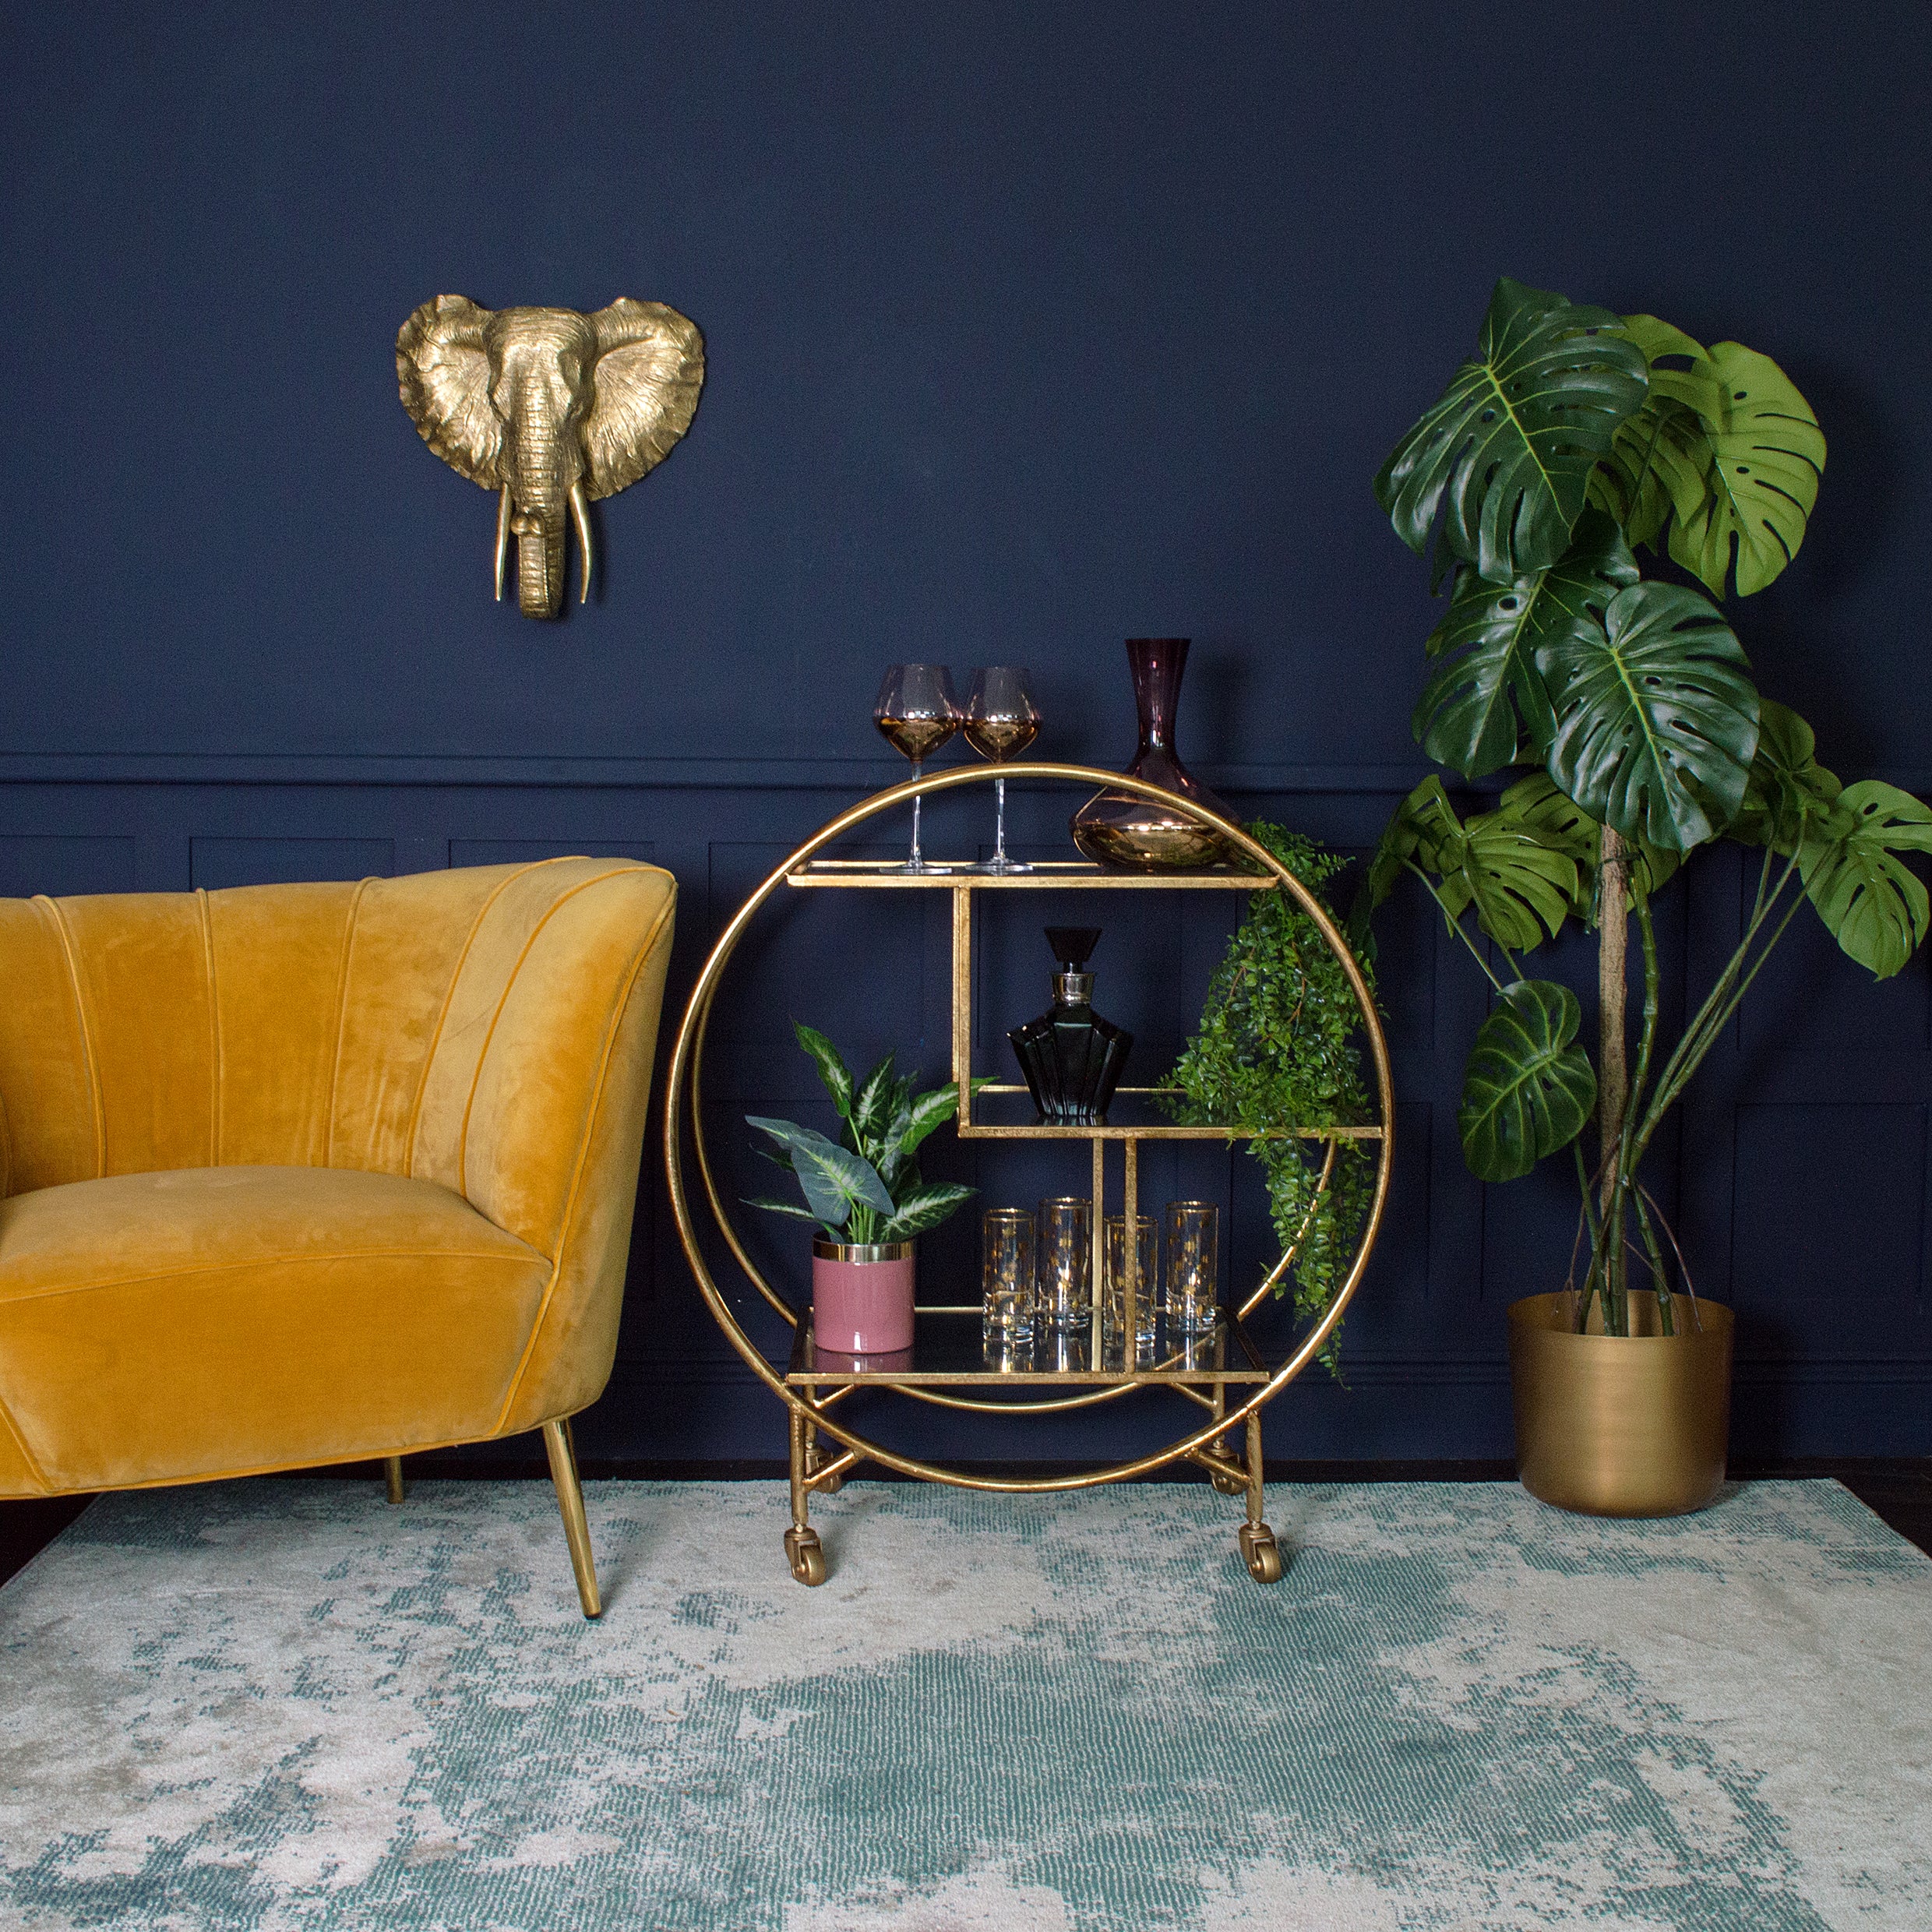 The Curvarella Turmeric Velvet Chair